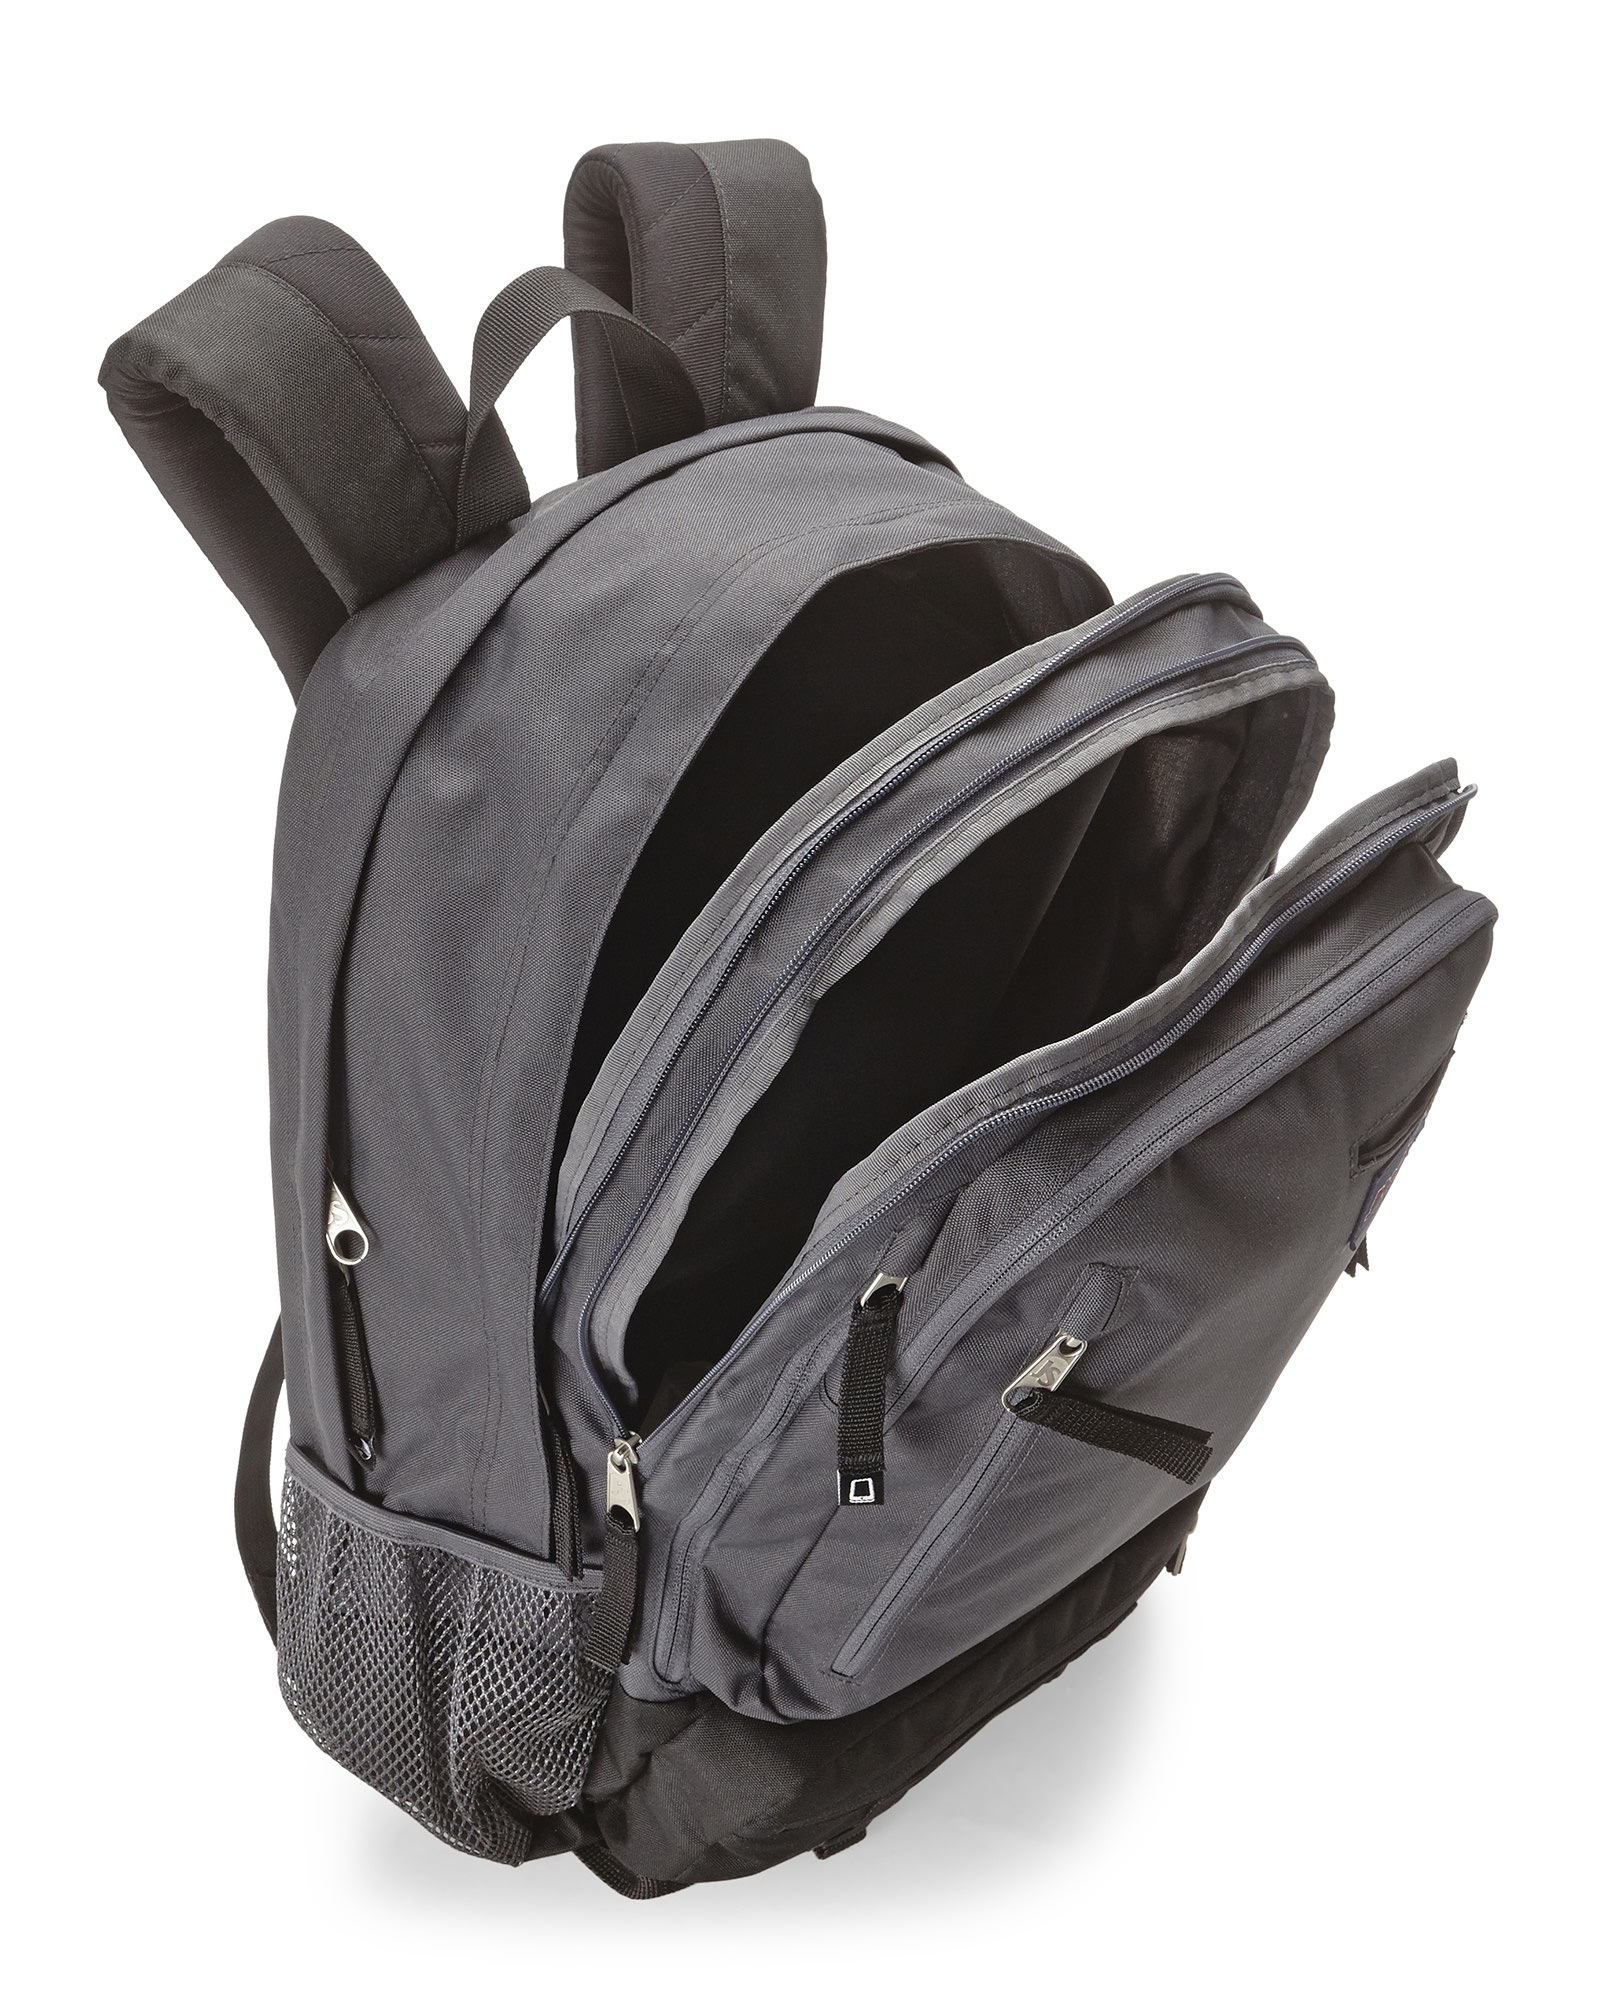 Jansport Grey Envoy Tech Backpack in Gray for Men - Lyst